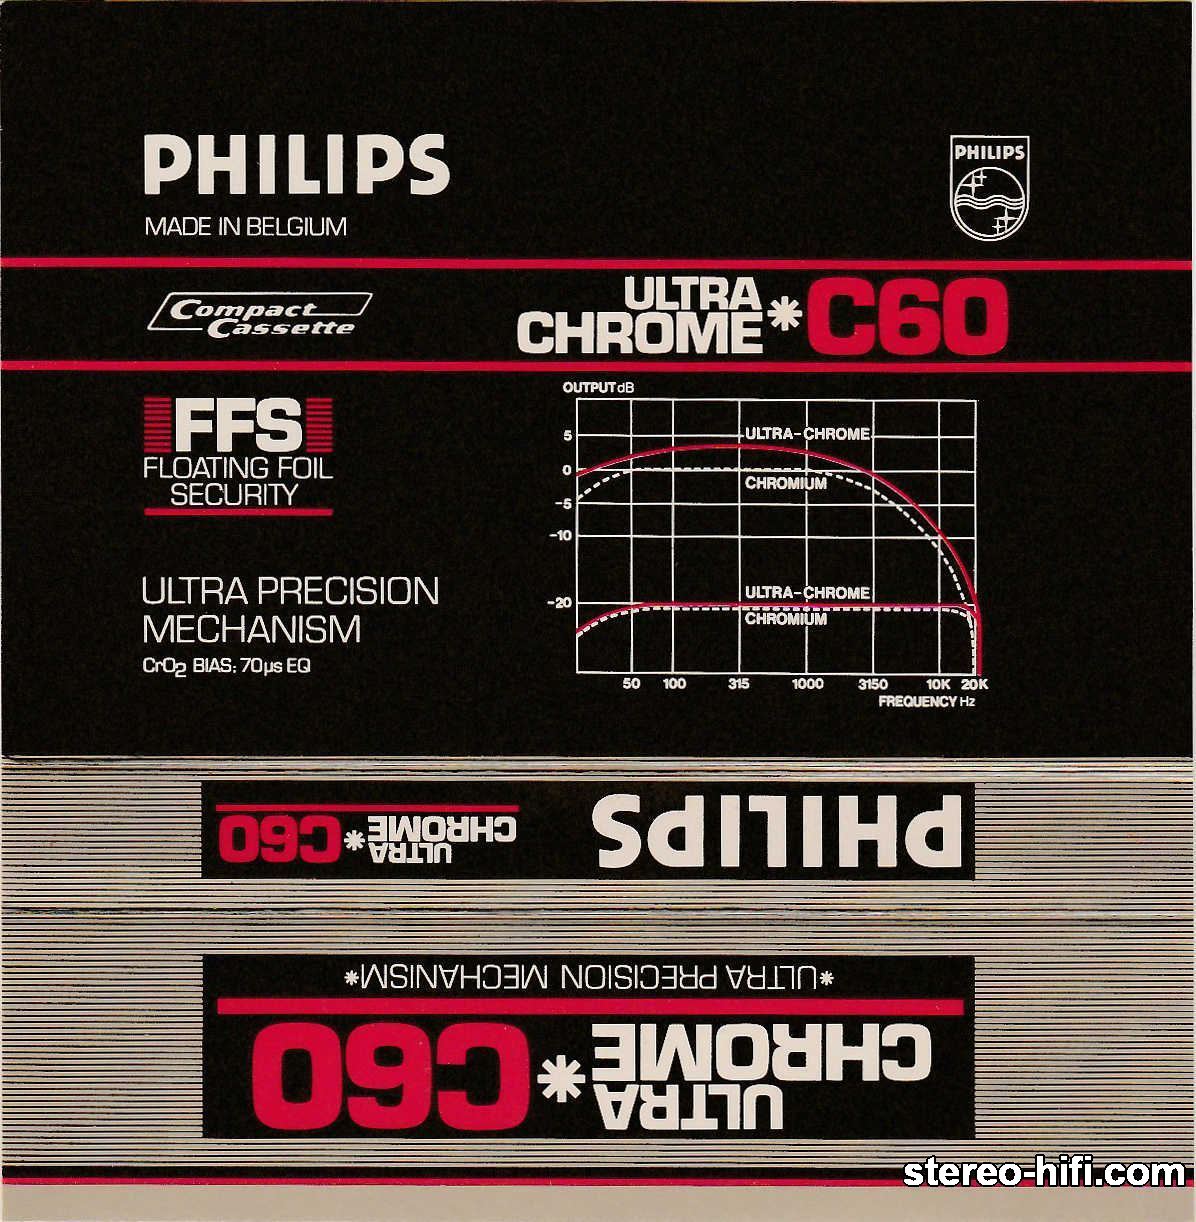 Philips Ultra Chrome C60